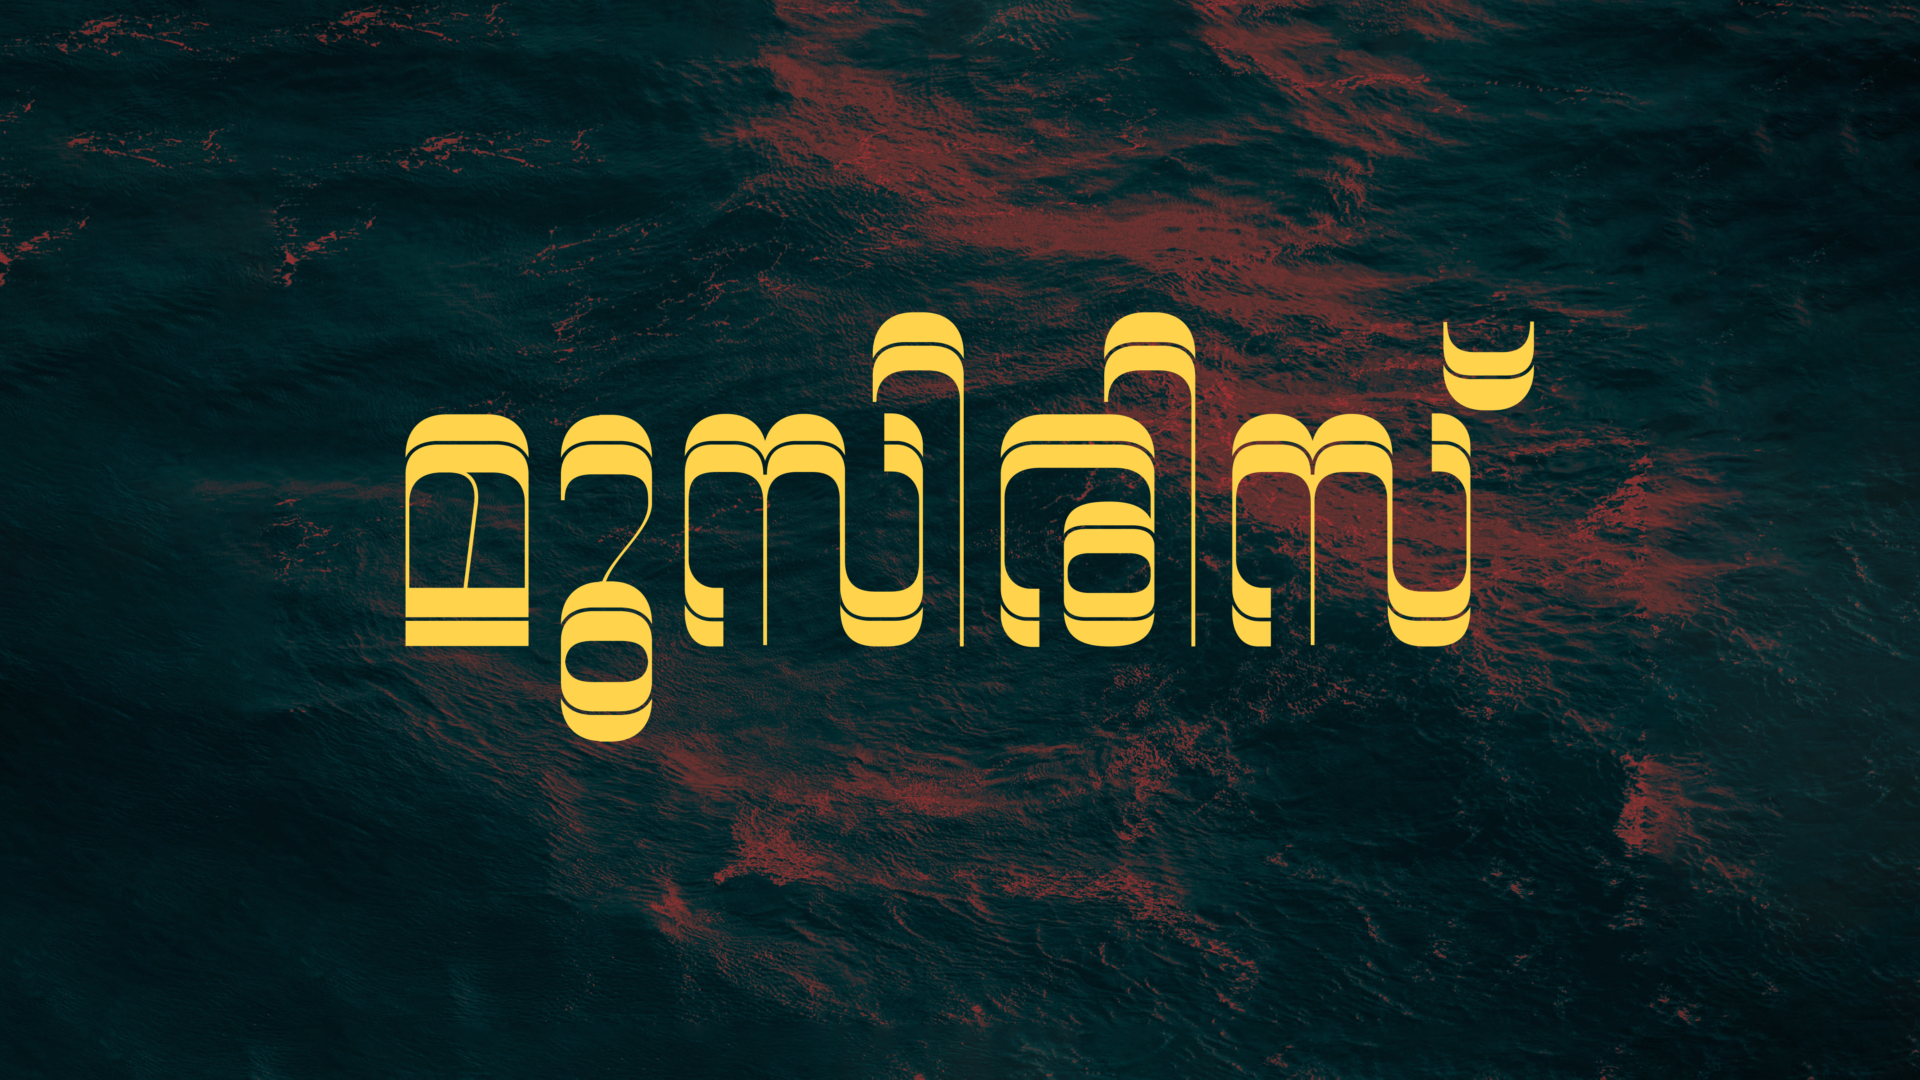 Muziris – Malayalam Display Typeface